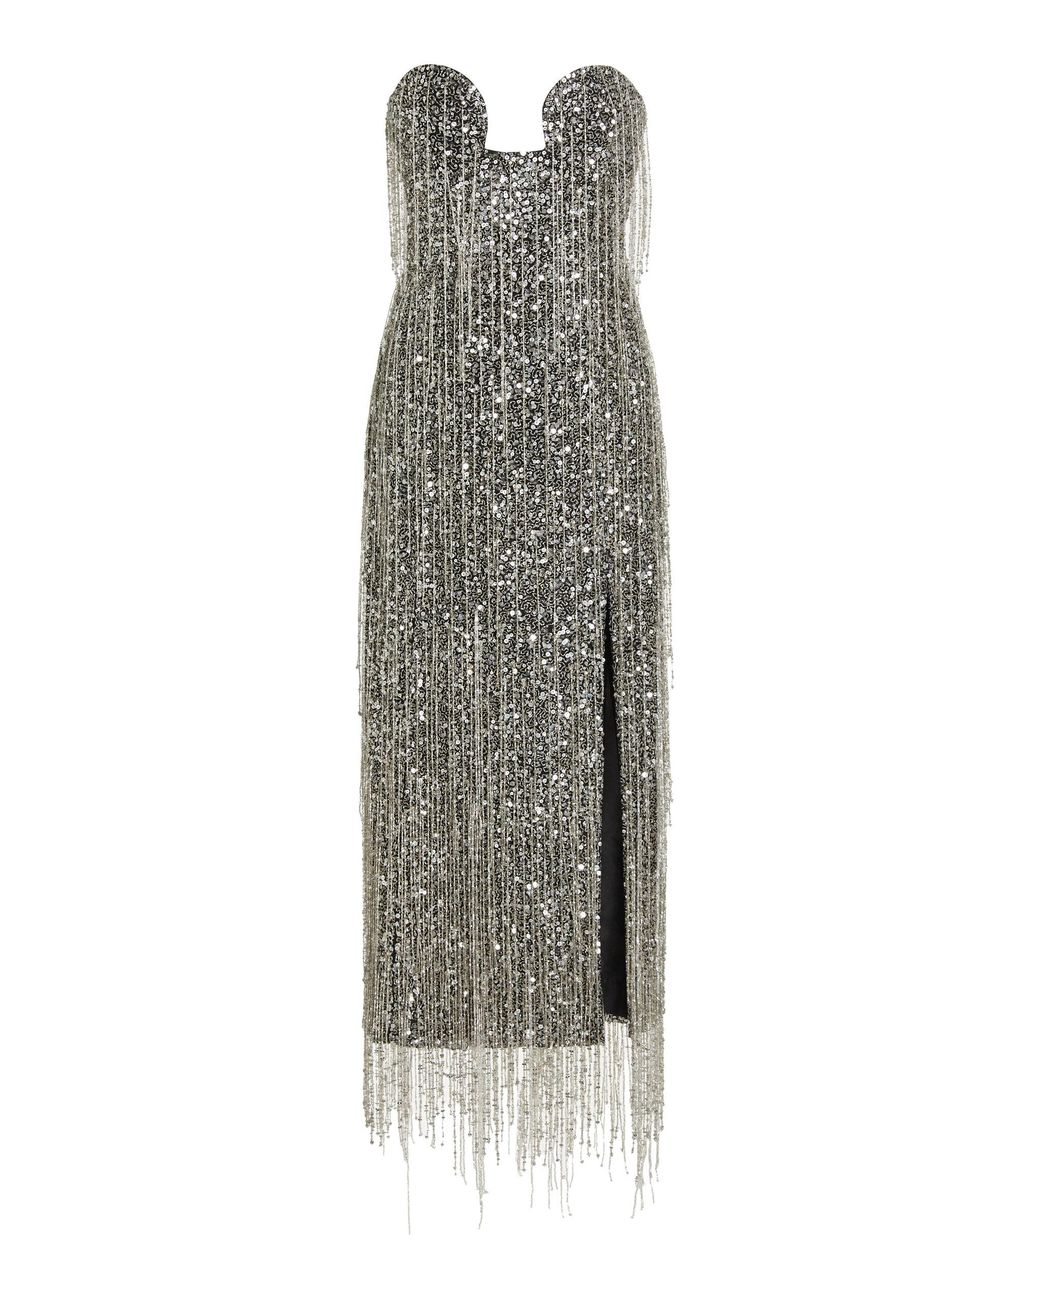 Carolina Herrera Fringed Embellished Silk Midi Dress in Metallic